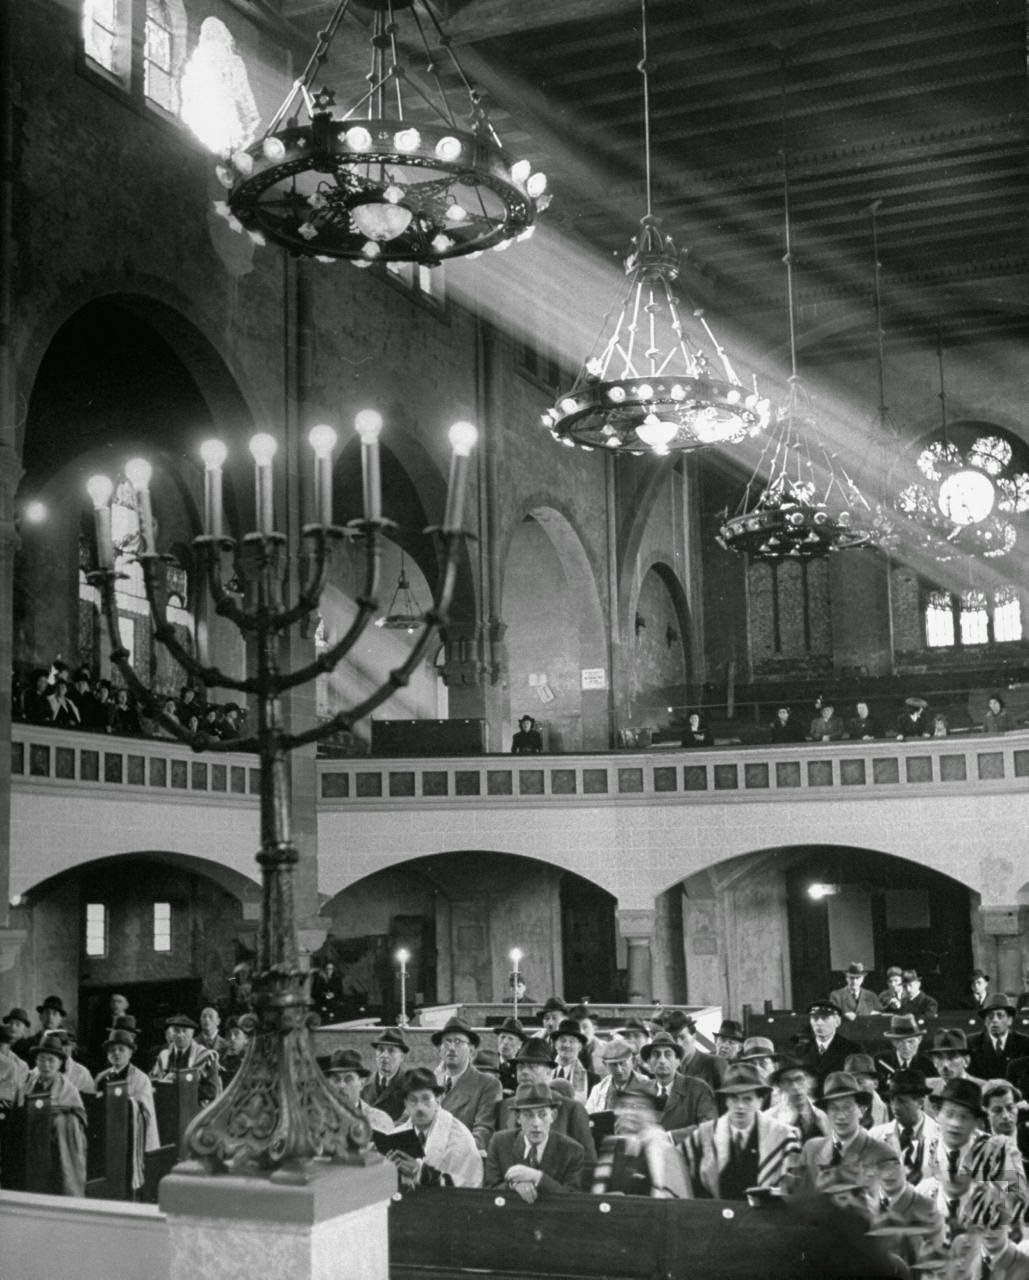 Jewish congregation observing synagouge services during Passover.